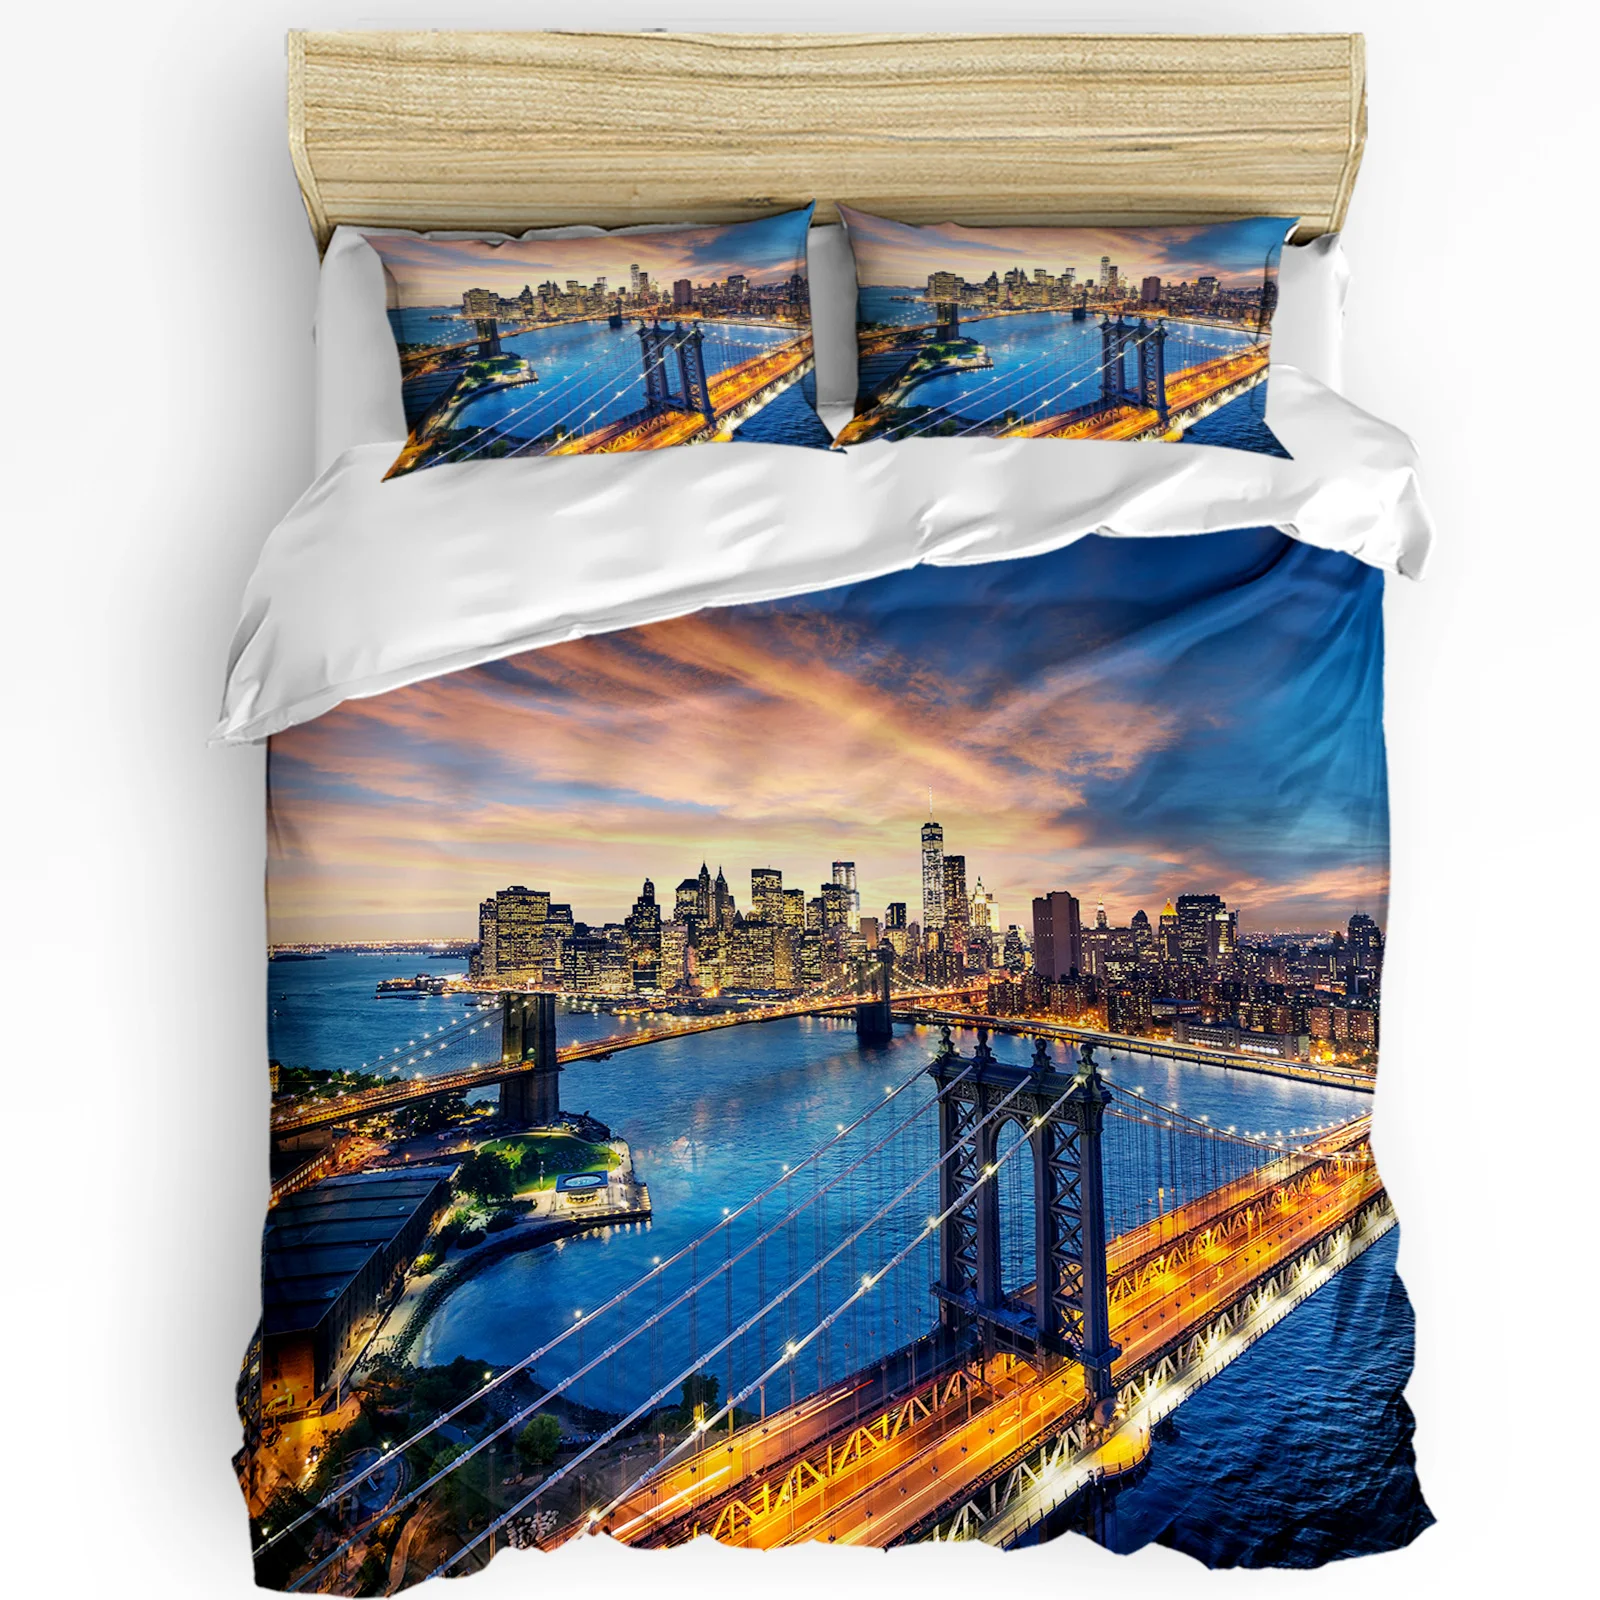 

3pcs Bedding Set Urban Bridge Brooklyn Sunset City Building Duvet Cover Pillow Case Boy Kid Teen Girl Bedding Covers Set